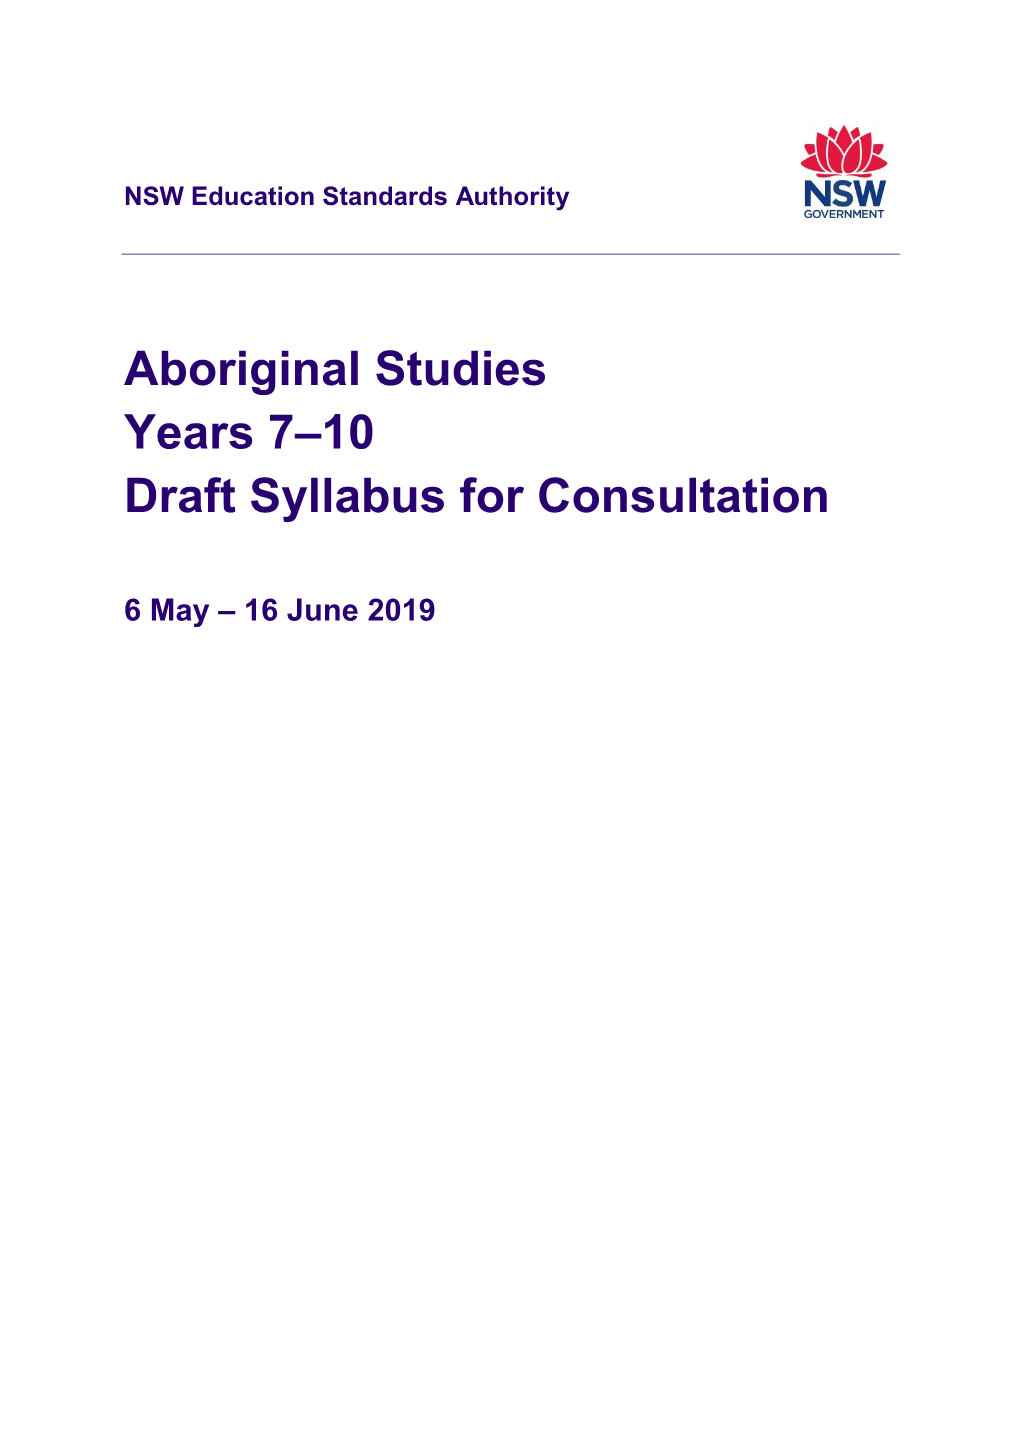 Aboriginal Studies Years 7–10 Draft Syllabus for Consultation 2019 4 Introduction